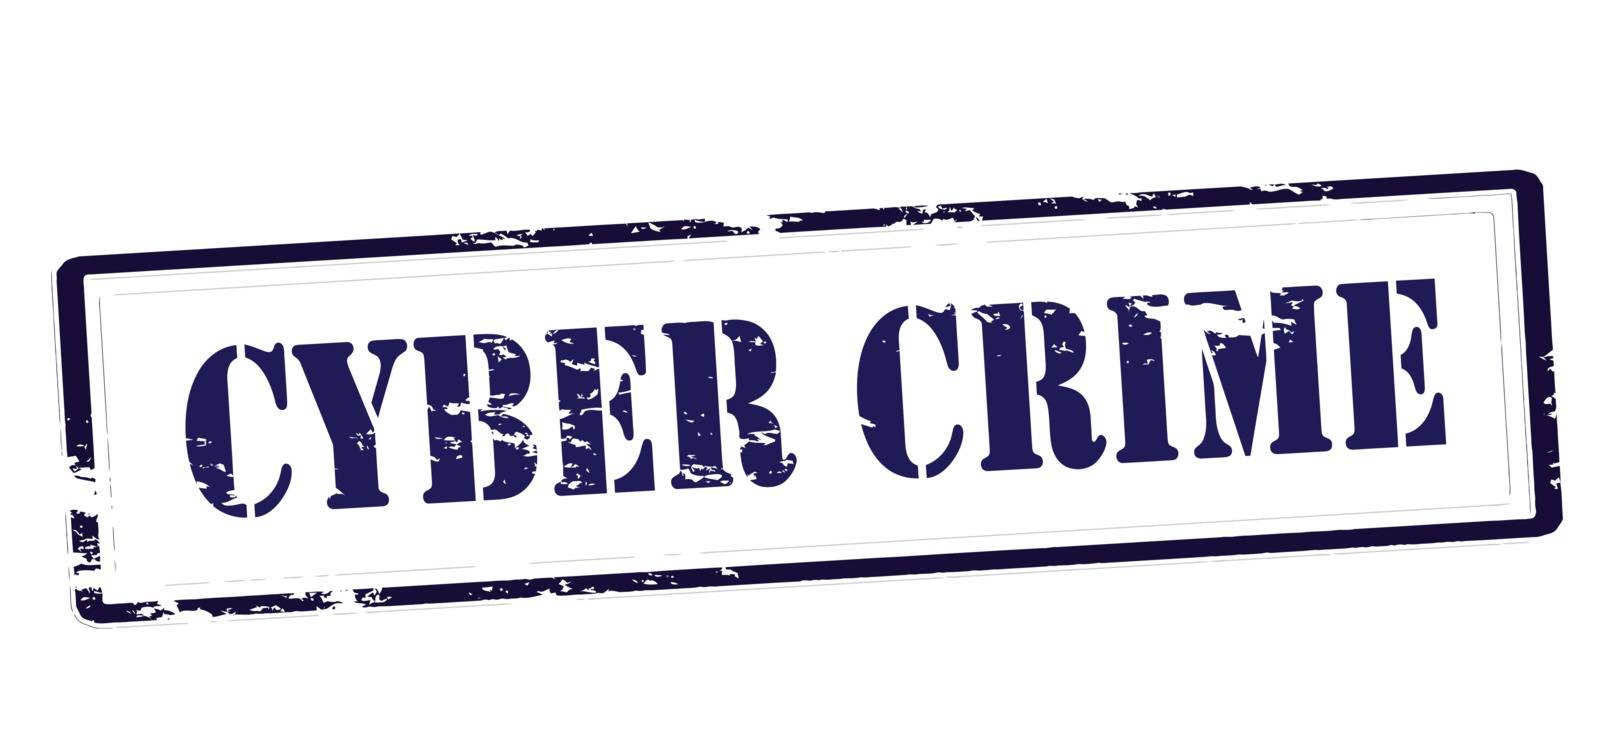 Cyber crime by carmenbobo